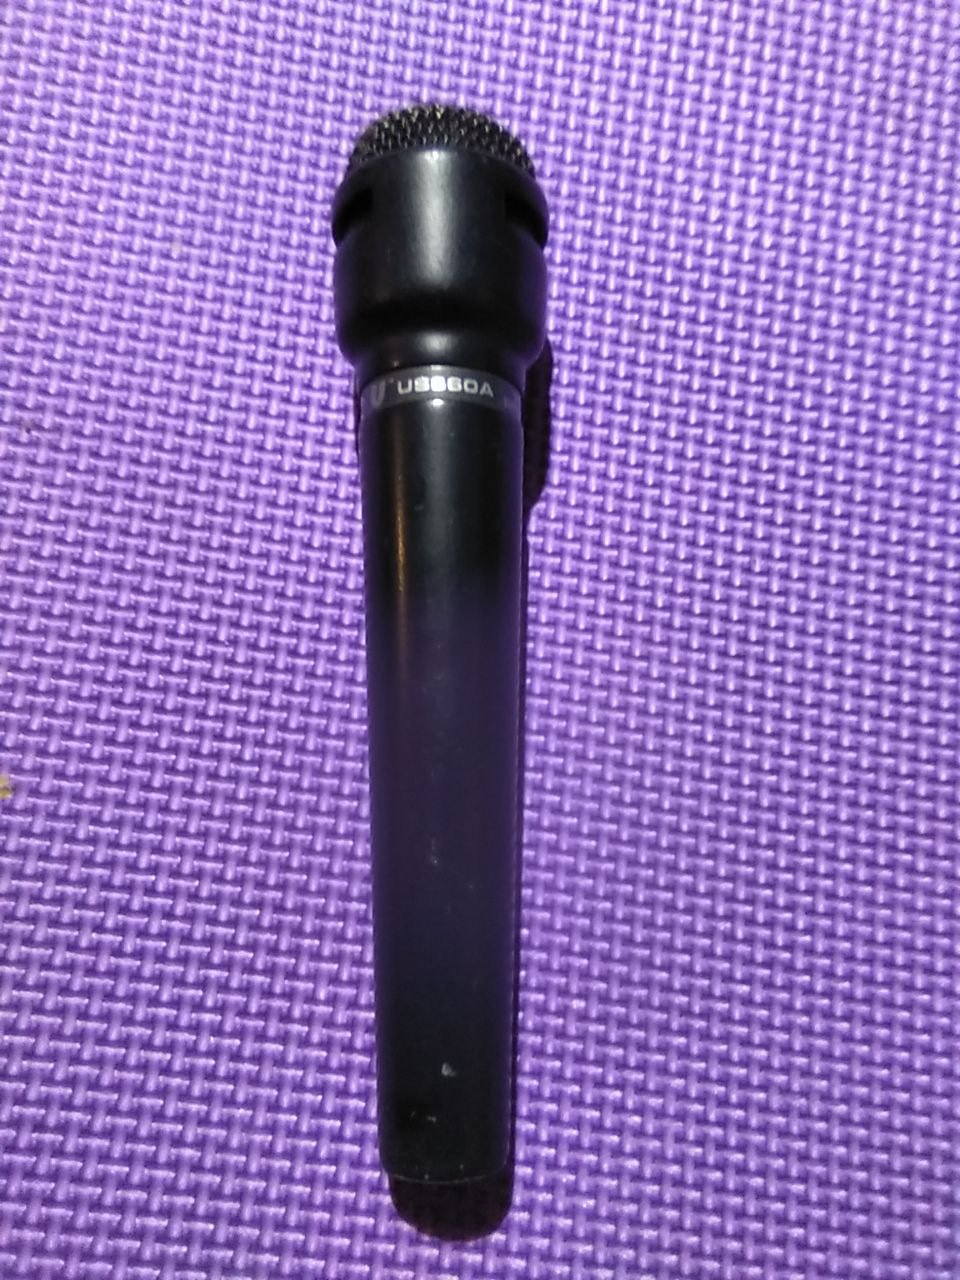 University Sound US660A Super cardioid Dynamic Microphone w/ 3-pin XLR connector